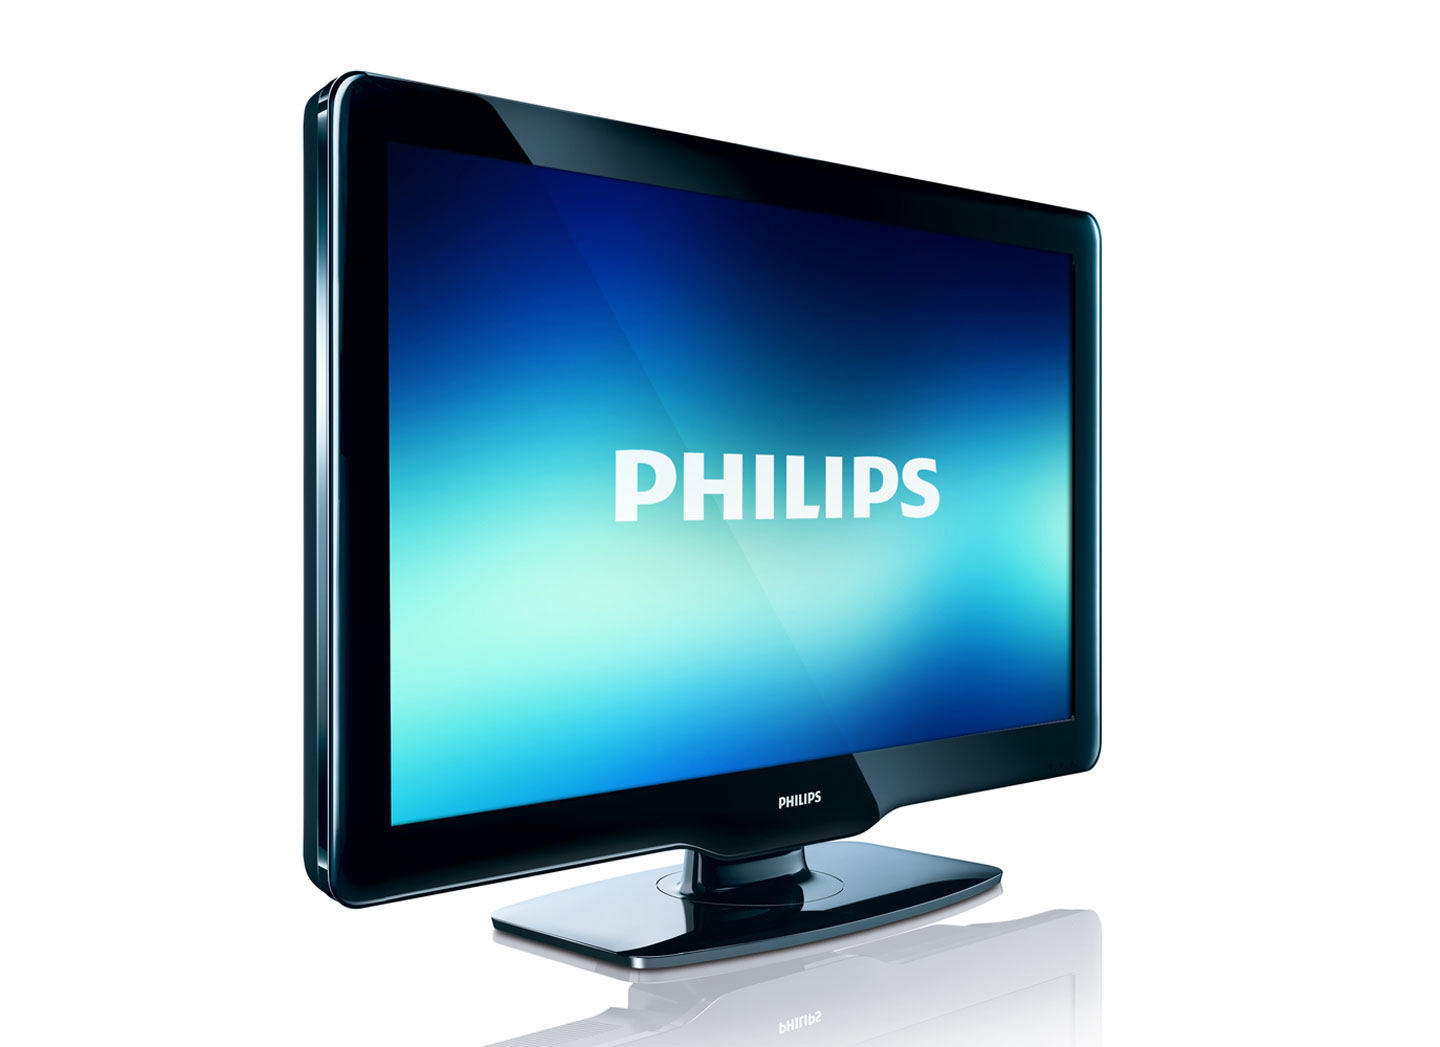 Филипс 32pfl3605. Филипс 32pfl3605/60. Philips PFL 3605/60. Телевизор Philips 32pfl3605/60. Телевизор LCD Philips 32 PFL 3605/60.